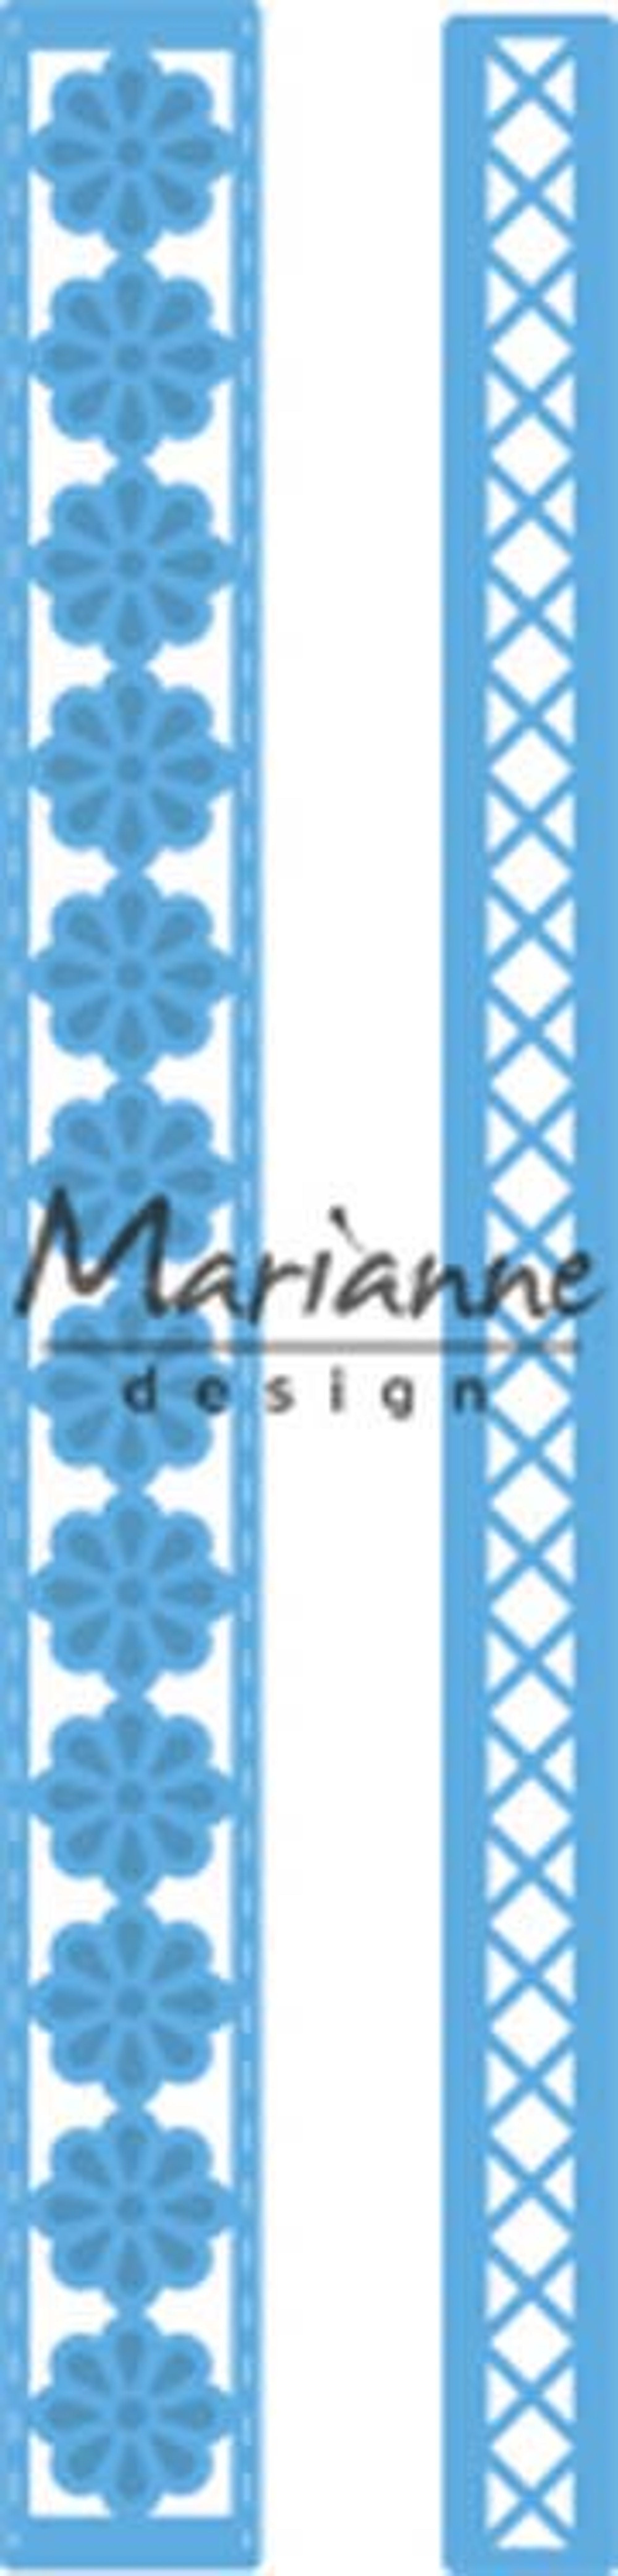 Marianne Design Creatables Anja's Long Border